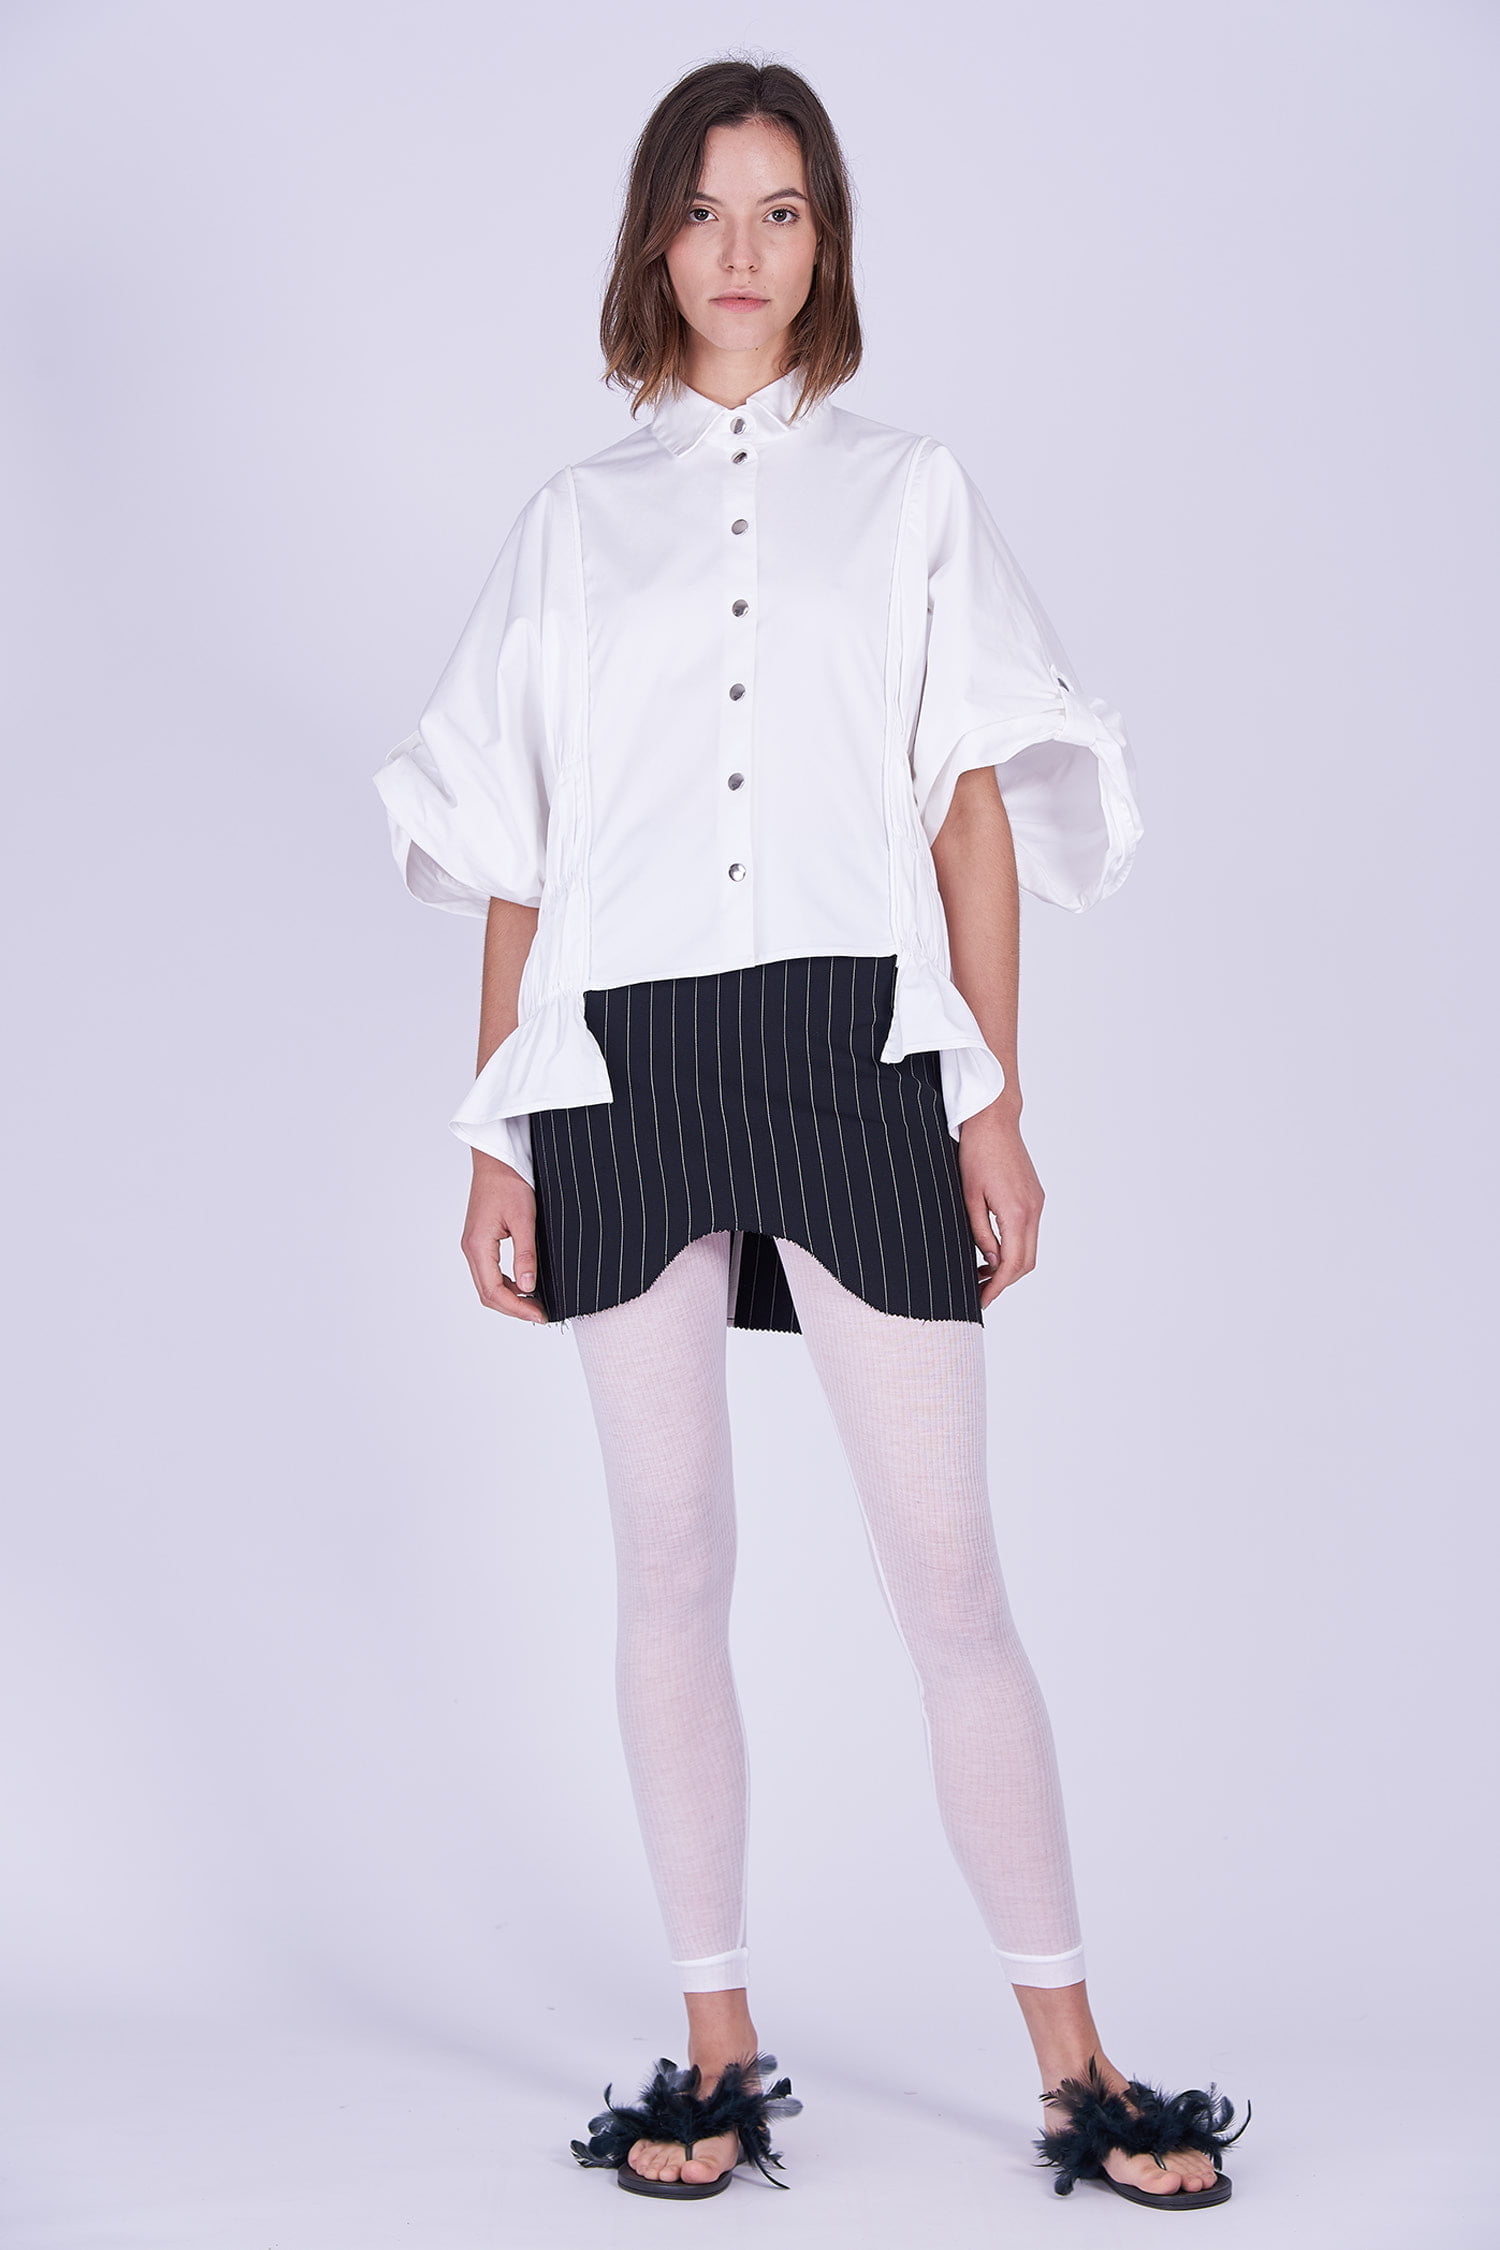 Acephala Ps2020 Black Striped Skirt White Exuberant Gathered Czarna Spodnica Biala Koszula Marszczona Front 2